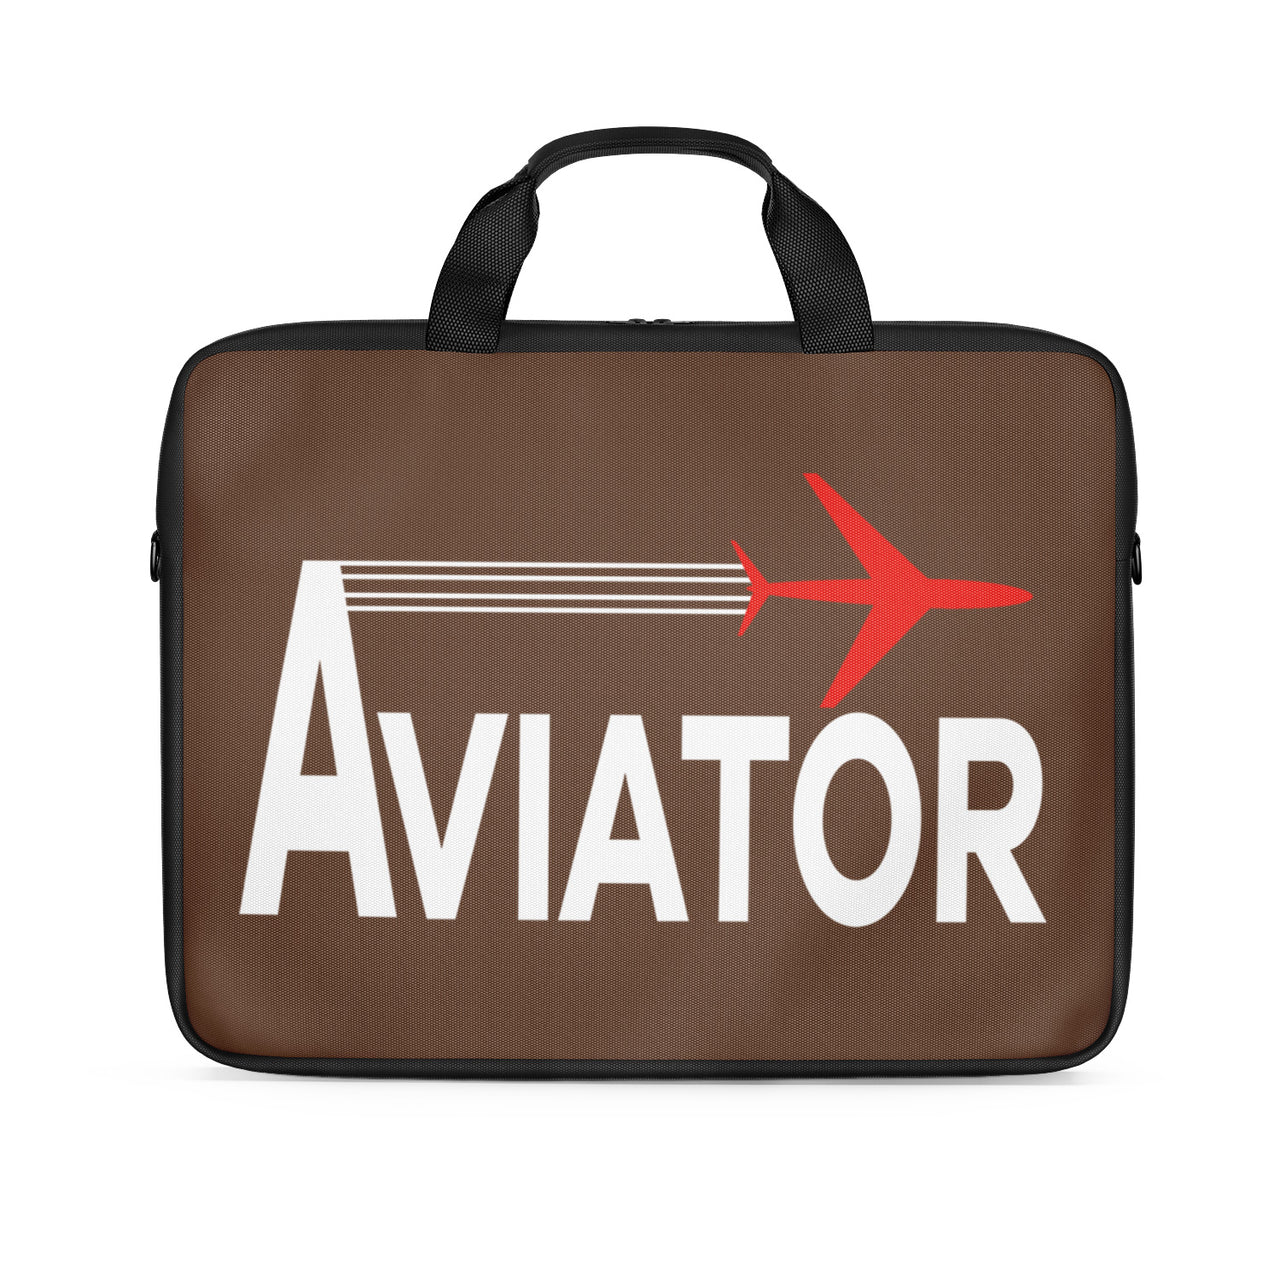 Aviator Designed Laptop & Tablet Bags